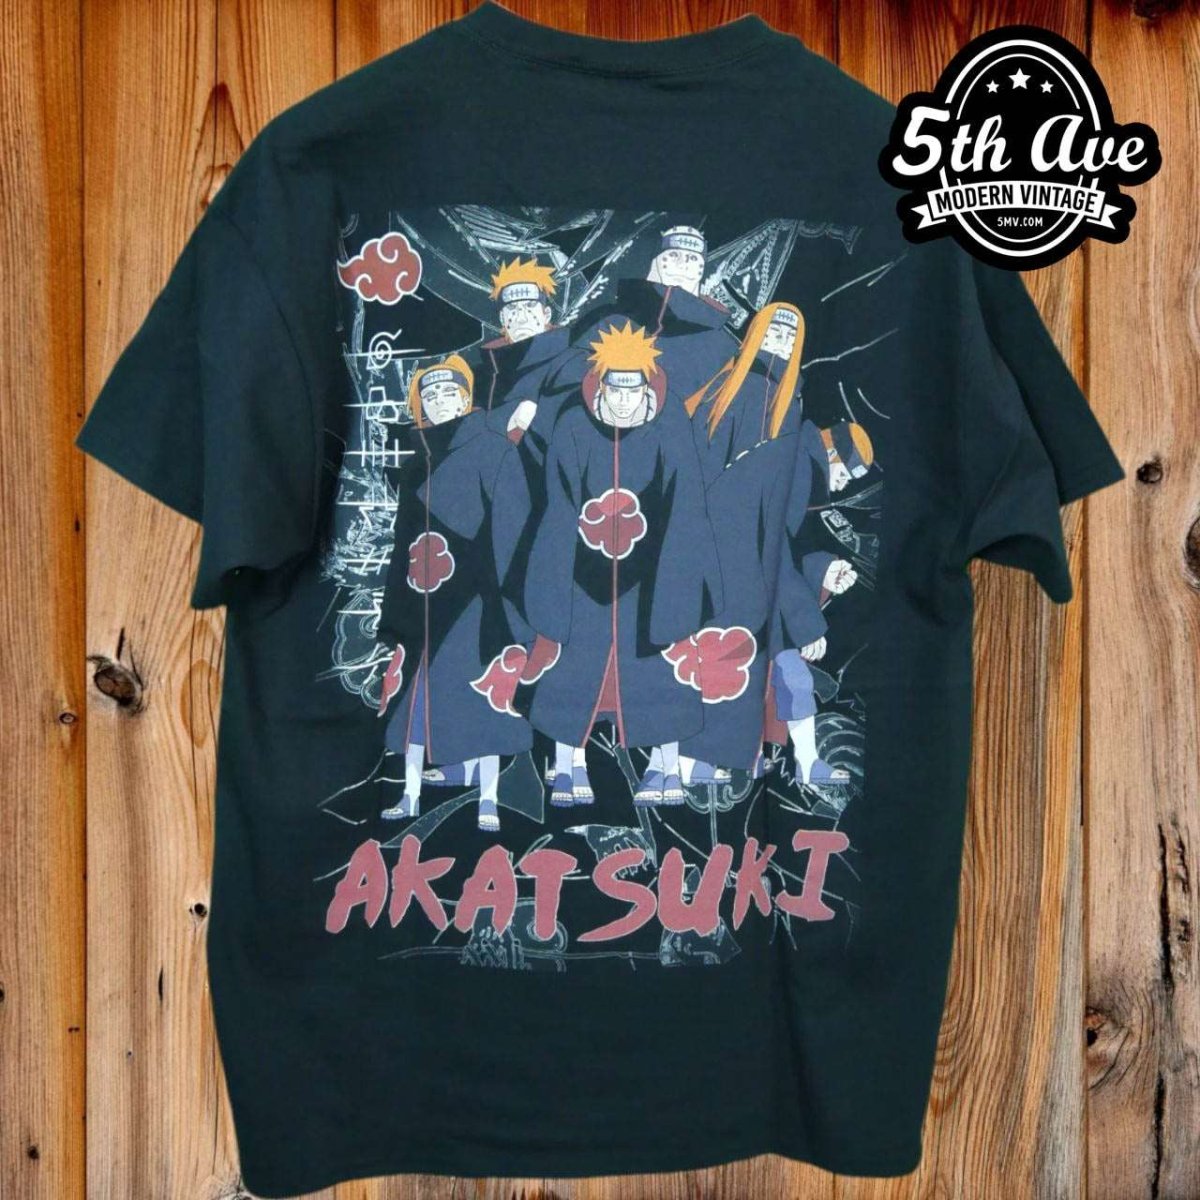 Naruto Shippuden Akatsuki - New Vintage Anime T shirt - Vintage Band Shirts